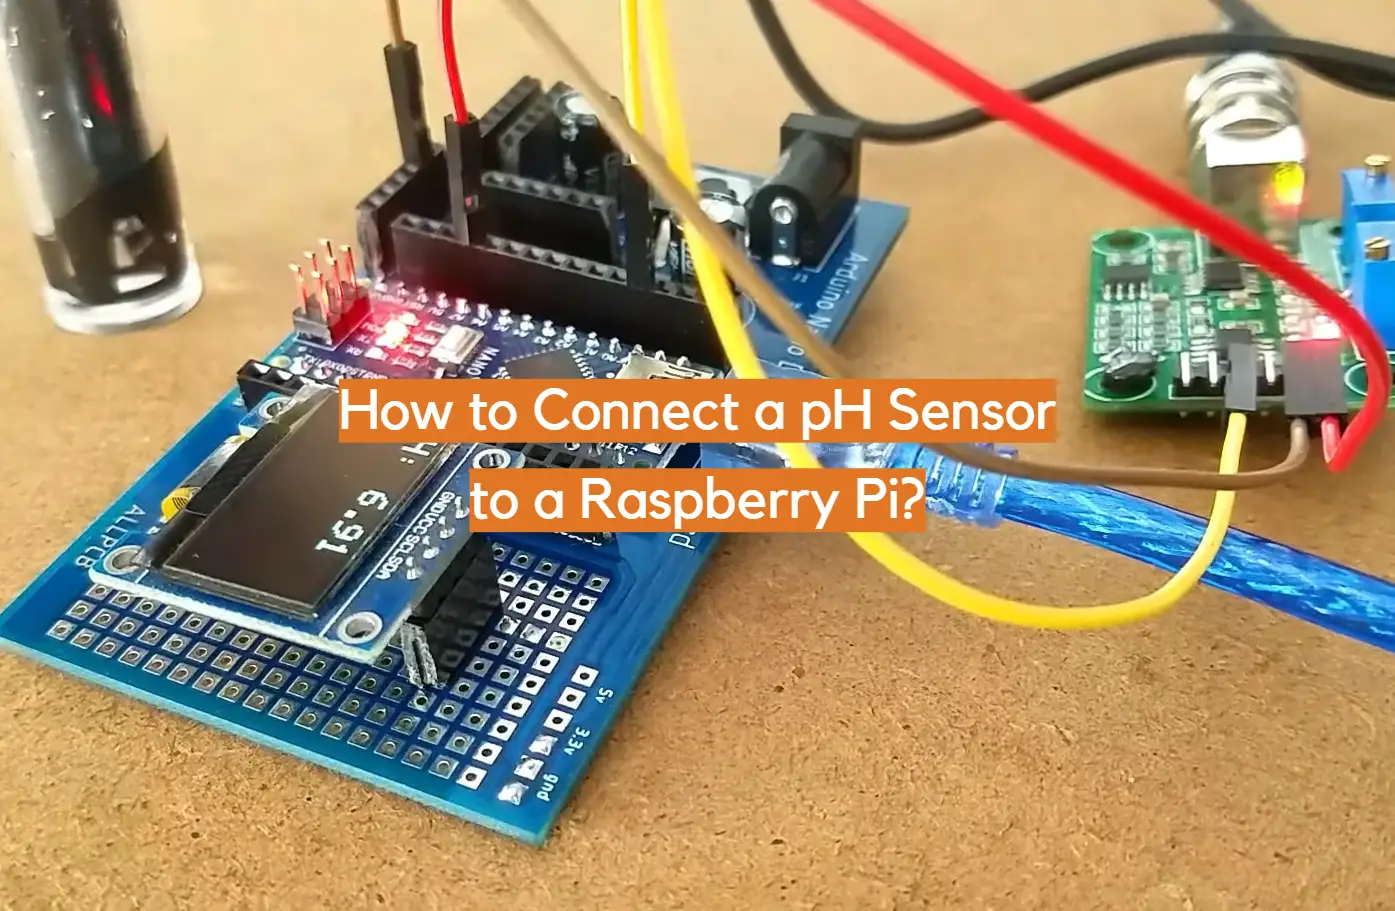 How to Connect a pH Sensor to a Raspberry Pi?